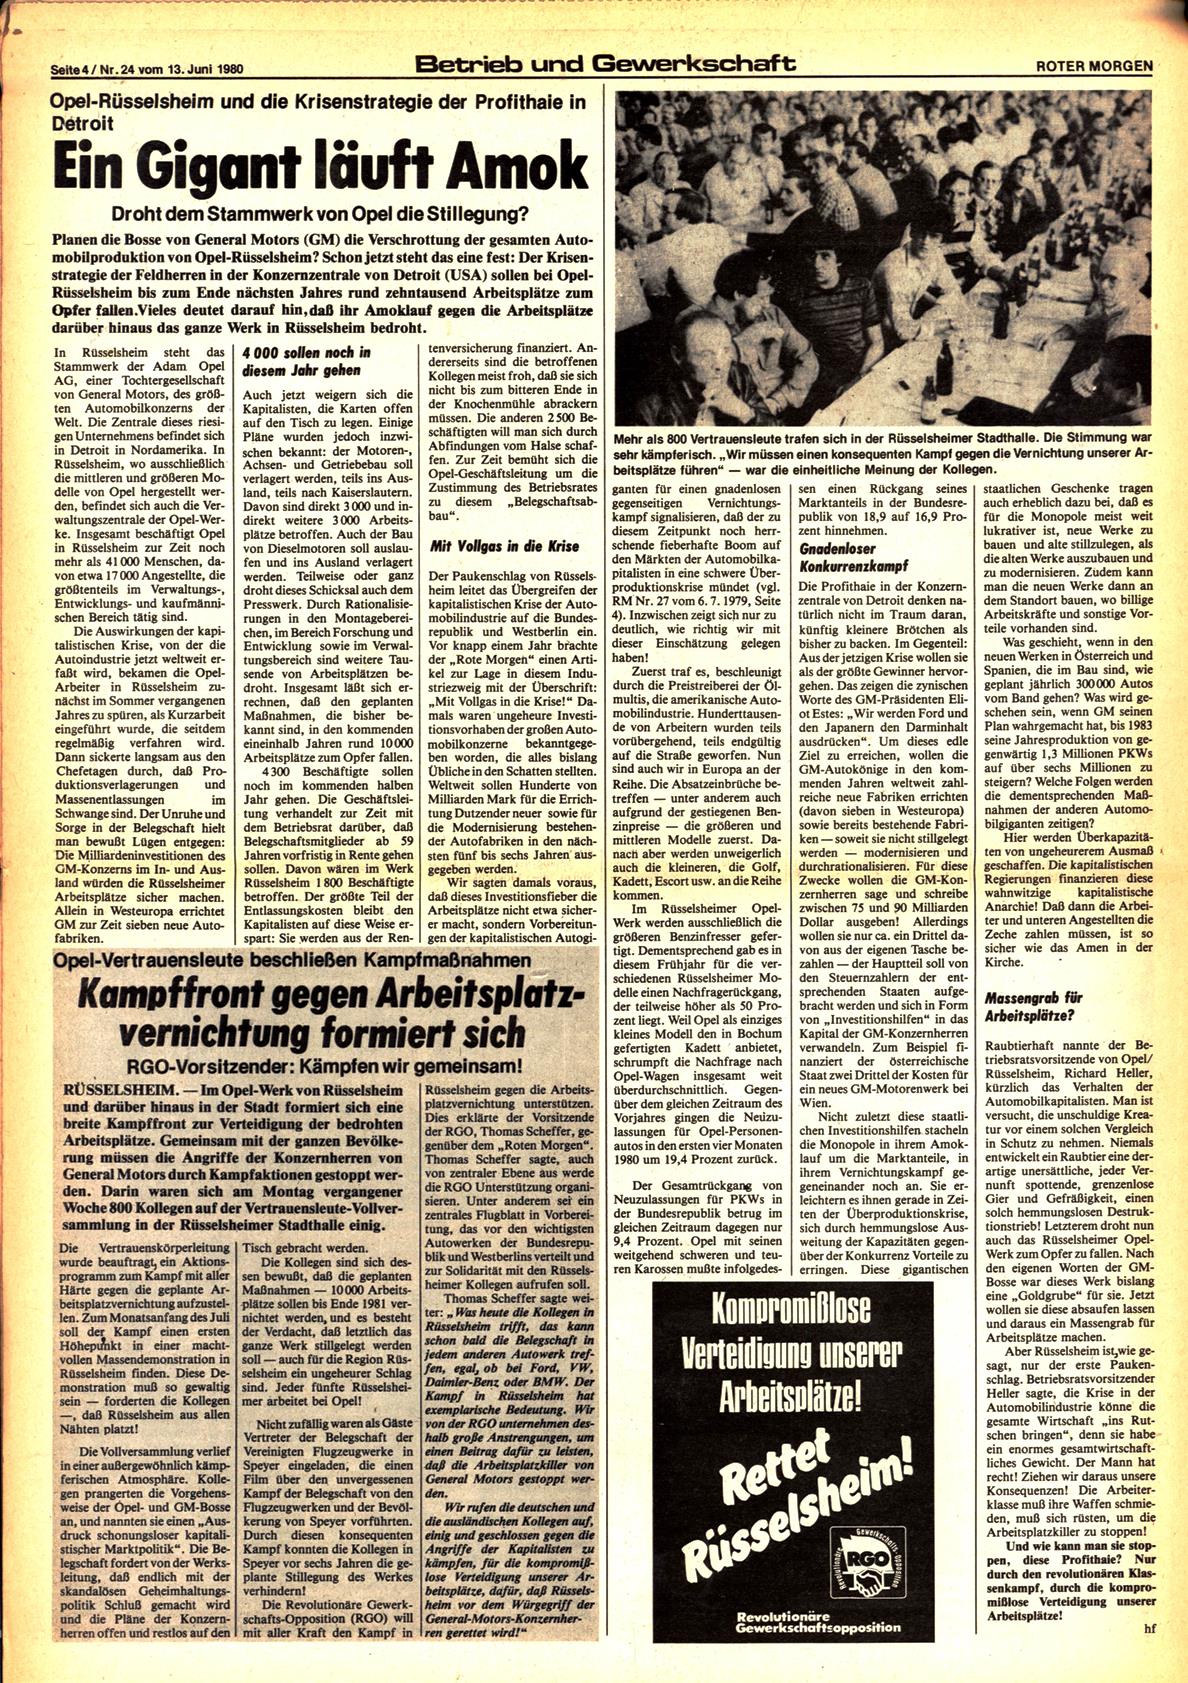 Roter Morgen, 14. Jg., 13. Juni 1980, Nr. 24, Seite 4